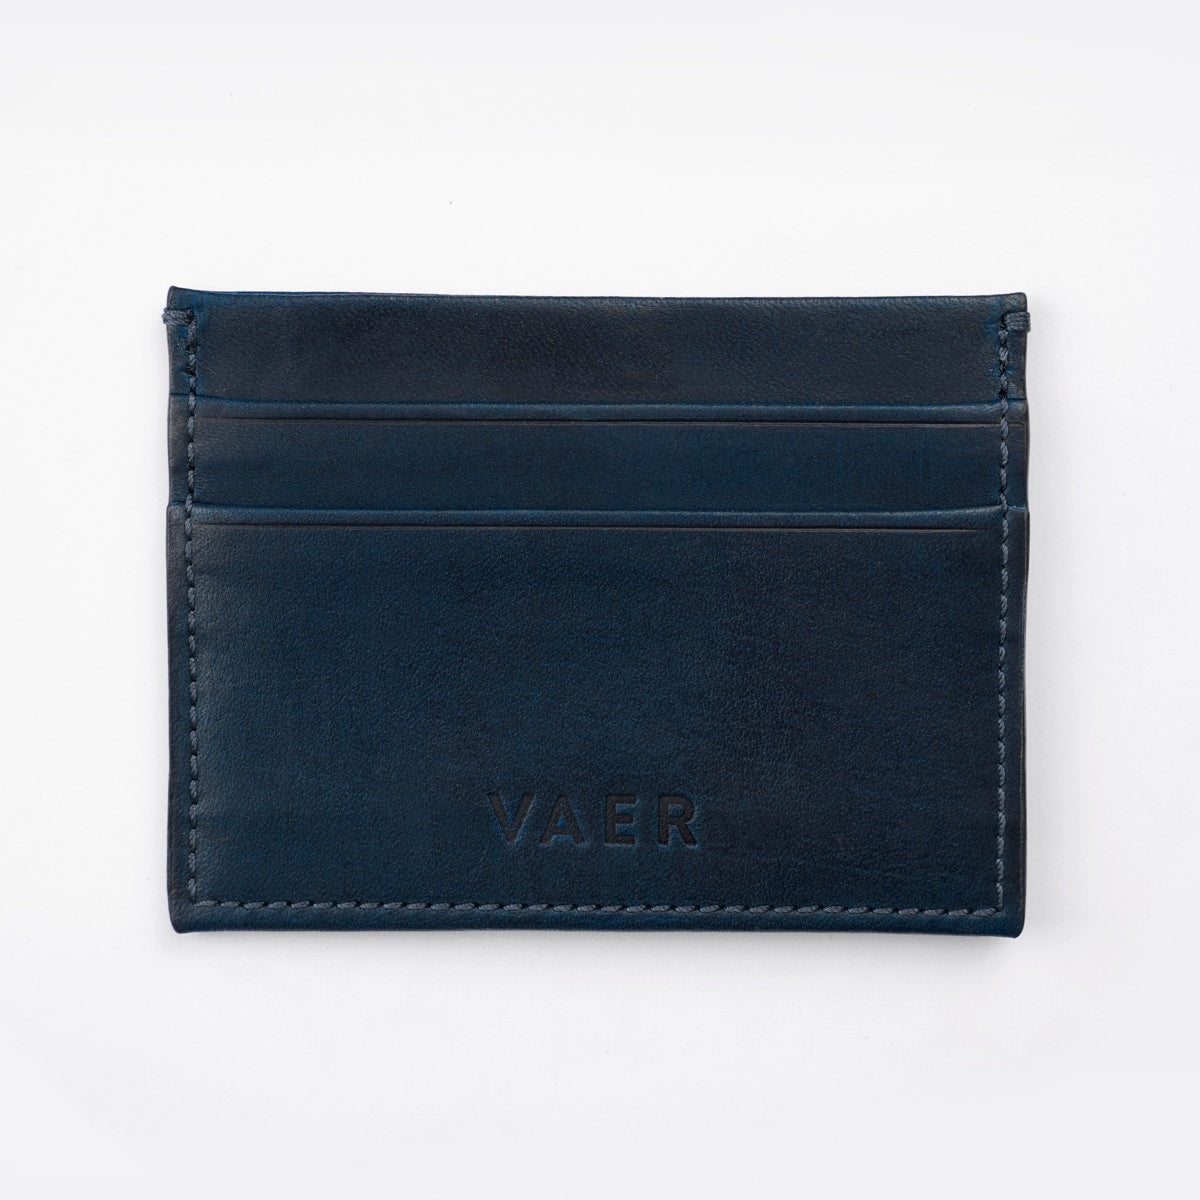 Card Holder Made of Ocean Plastic - Sustainable Wallet - GOT BAG